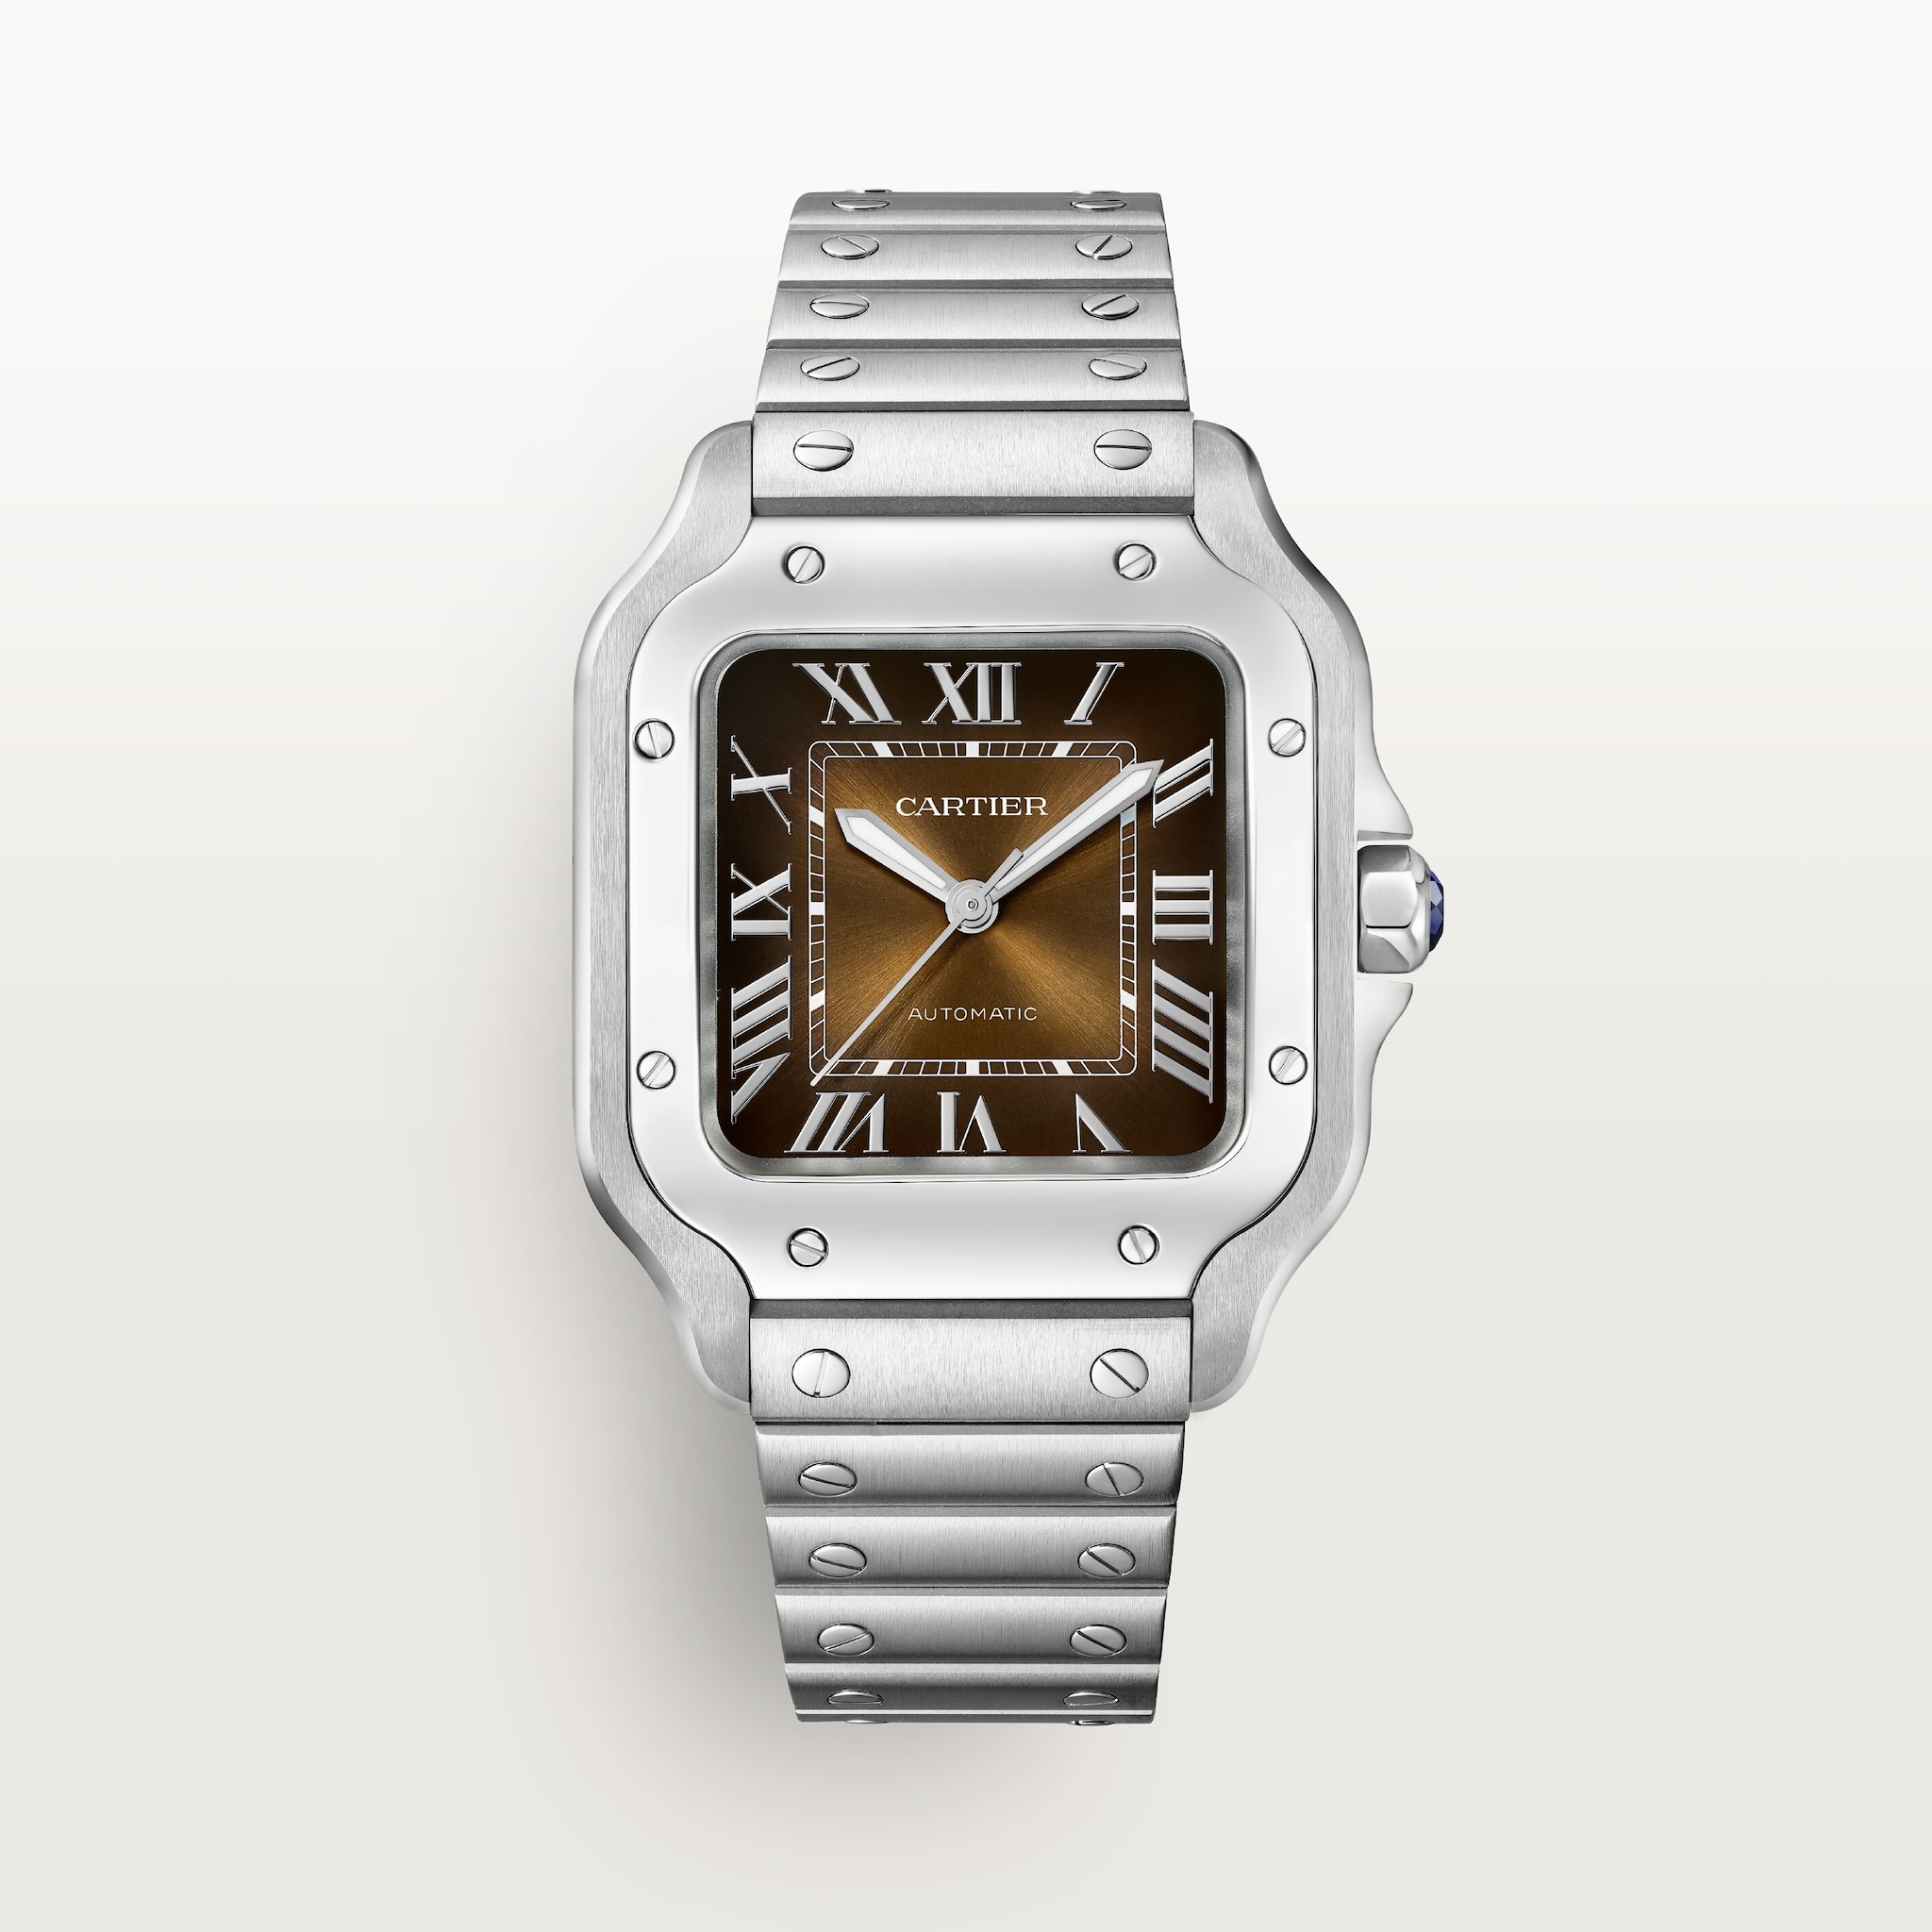 Santos de Cartier watchMedium model, automatic movement, steel, interchangeable metal and leather straps